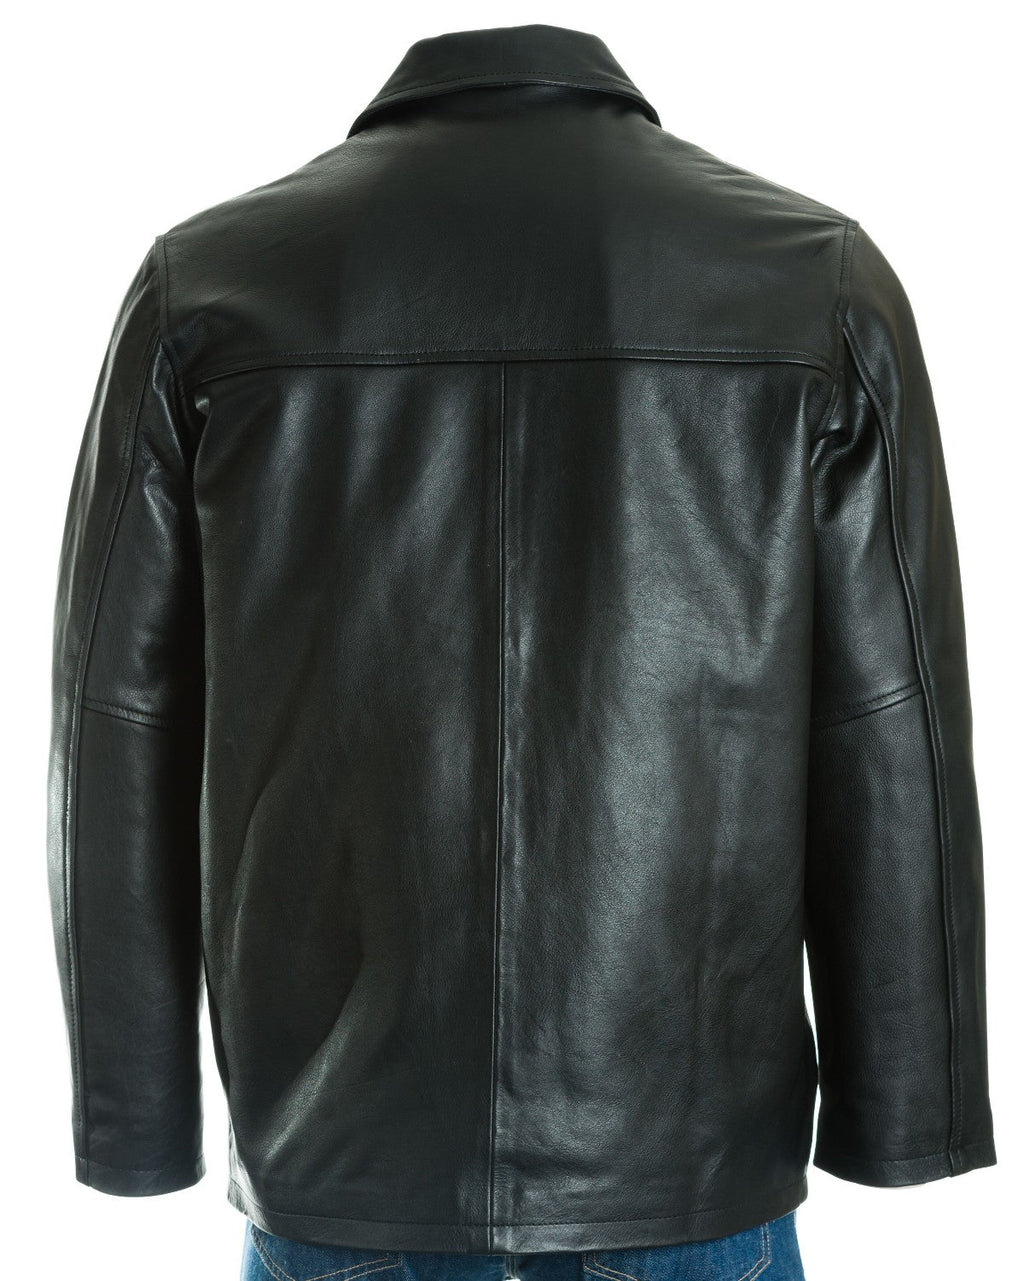 Men's Black Classic Box Style Leather Jacket: Franco